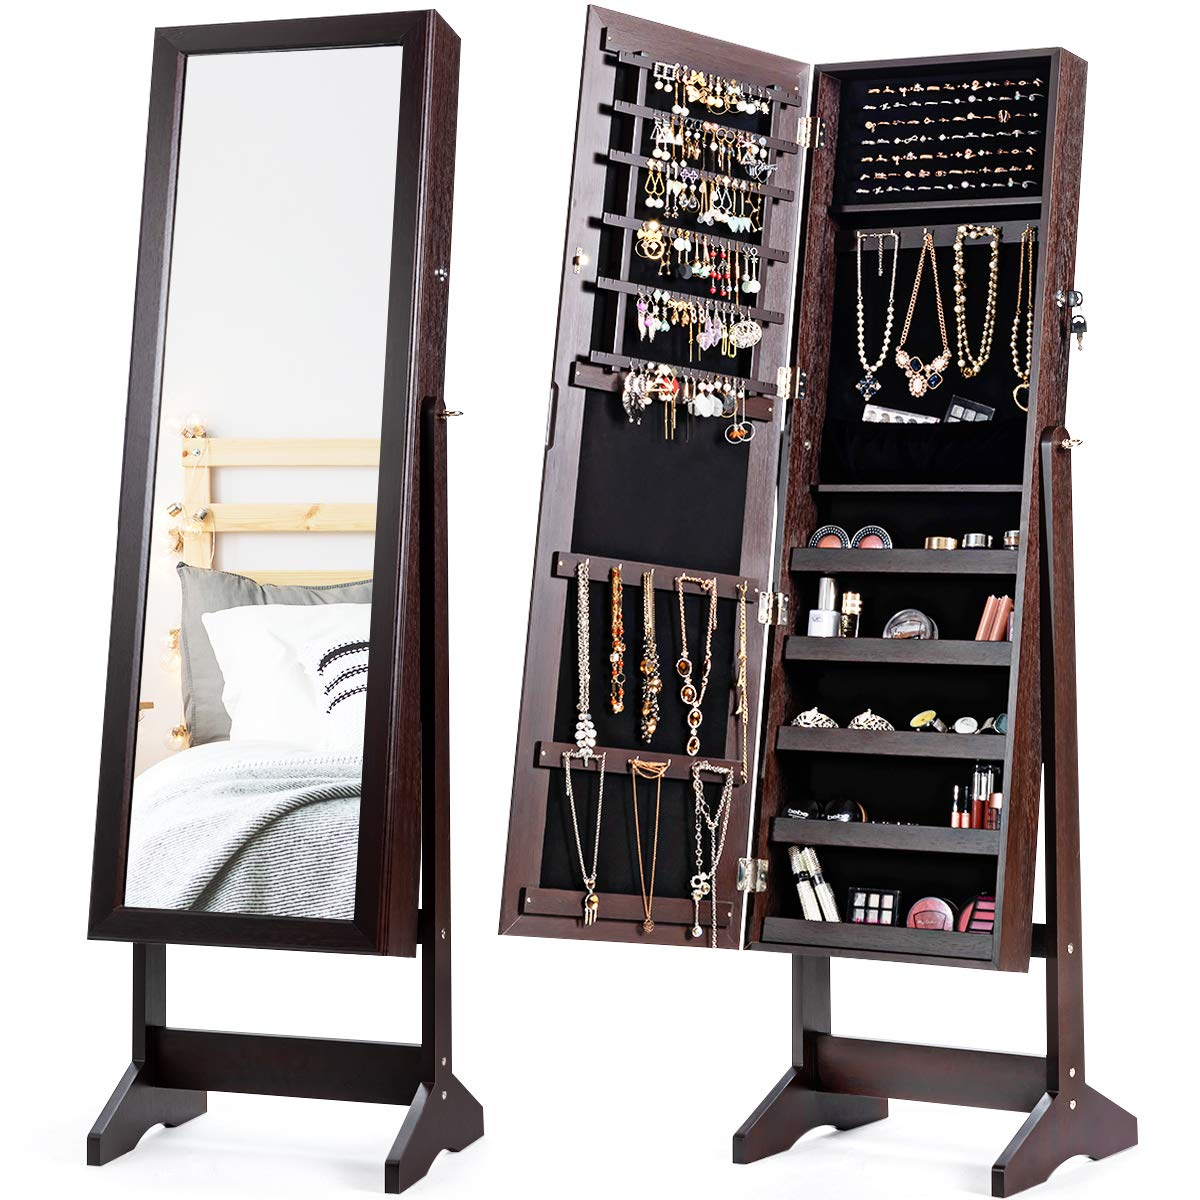 CHARMAID Freestanding Lockable Jewelry Organizer Box with Large Storage Capacity